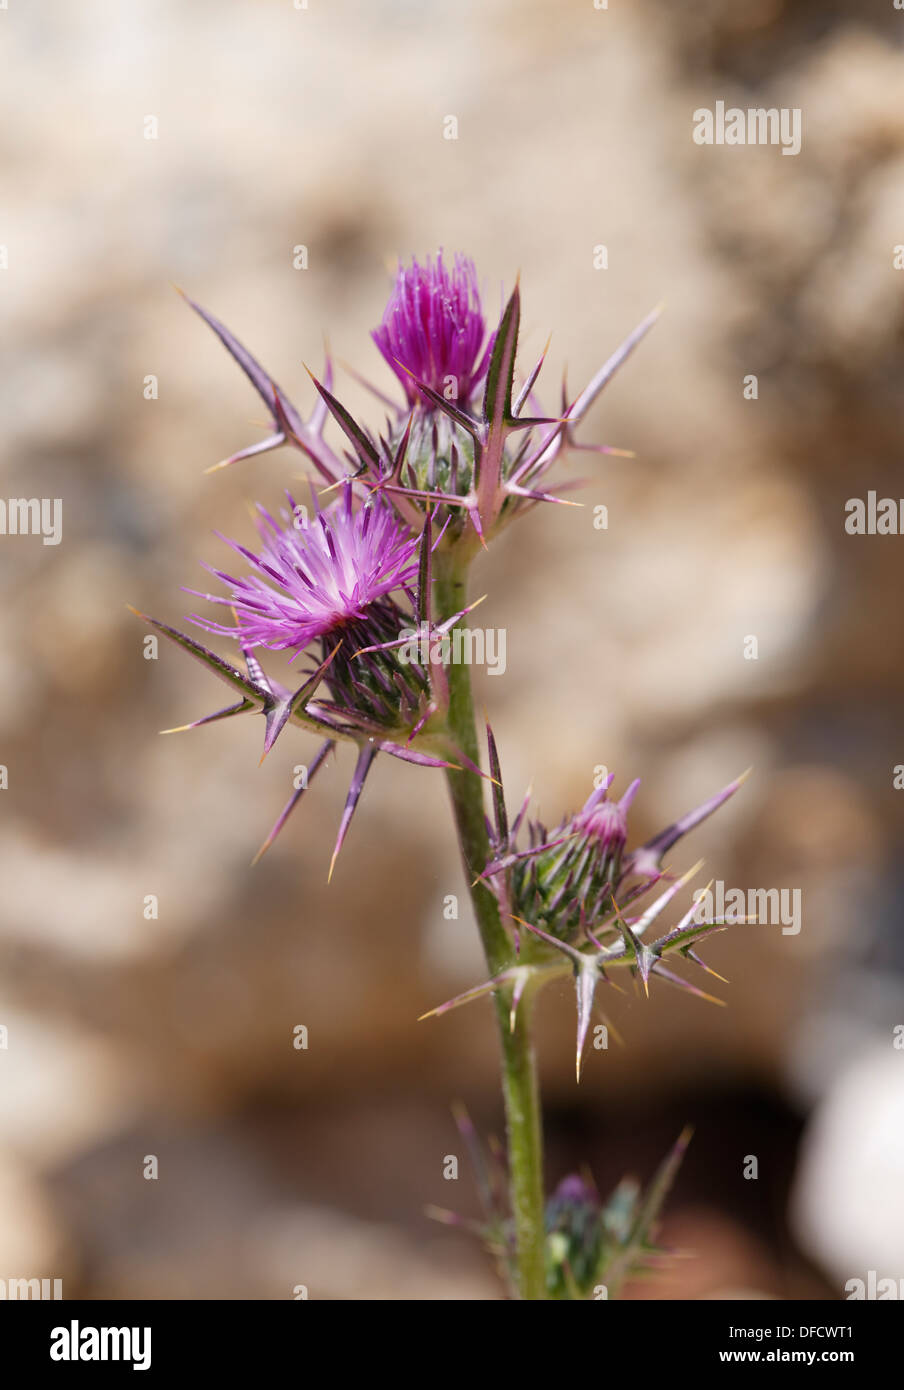 Turkey, Syrian Thistle flower, close up Stock Photo